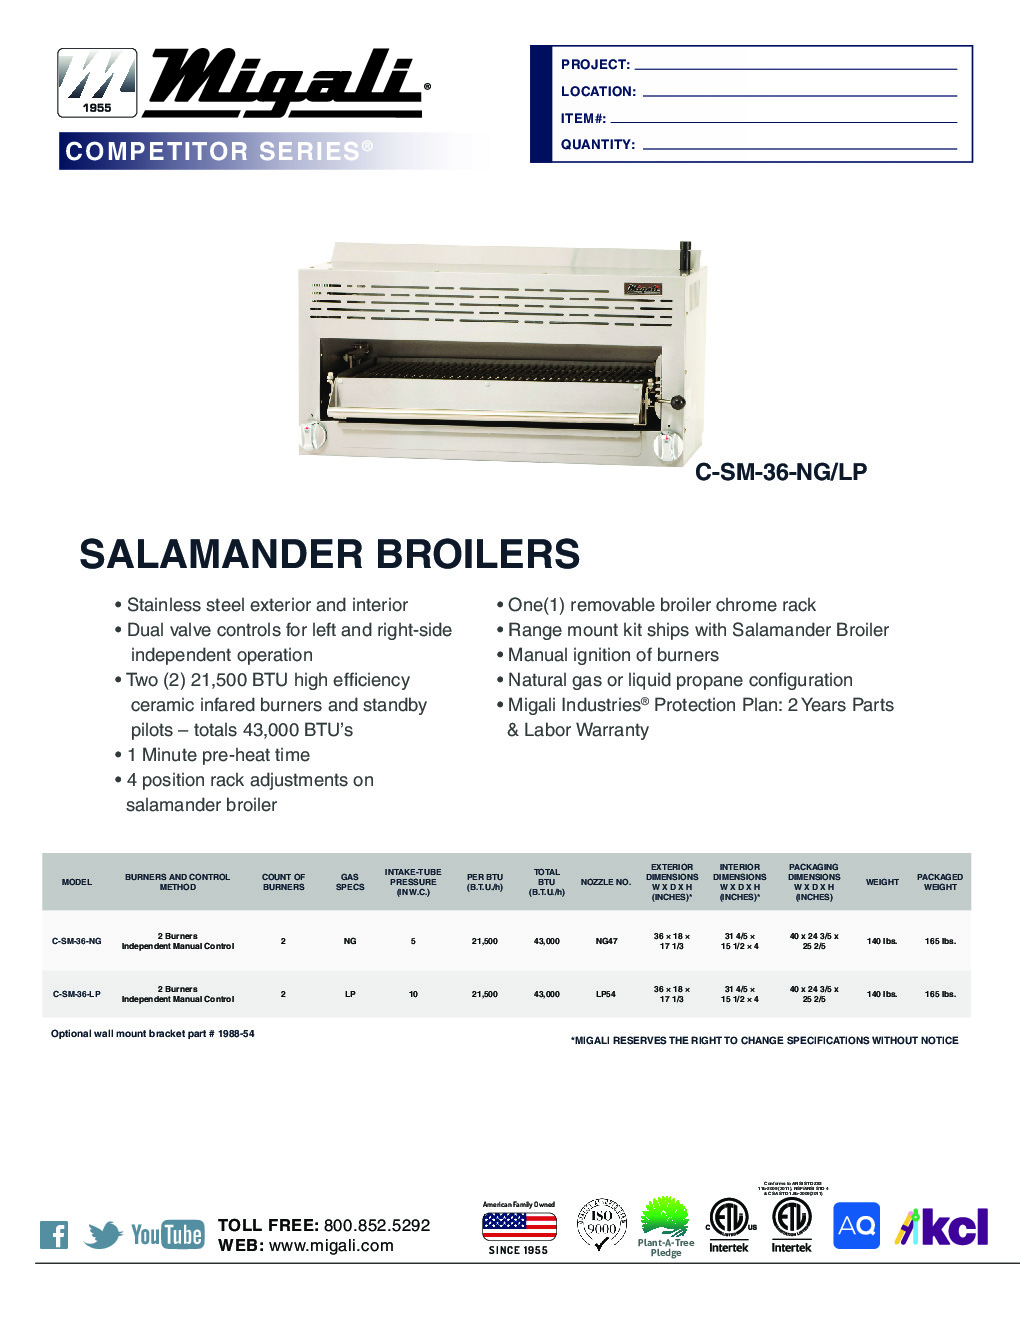 Migali C-SM-36-LP Gas Salamander Broiler